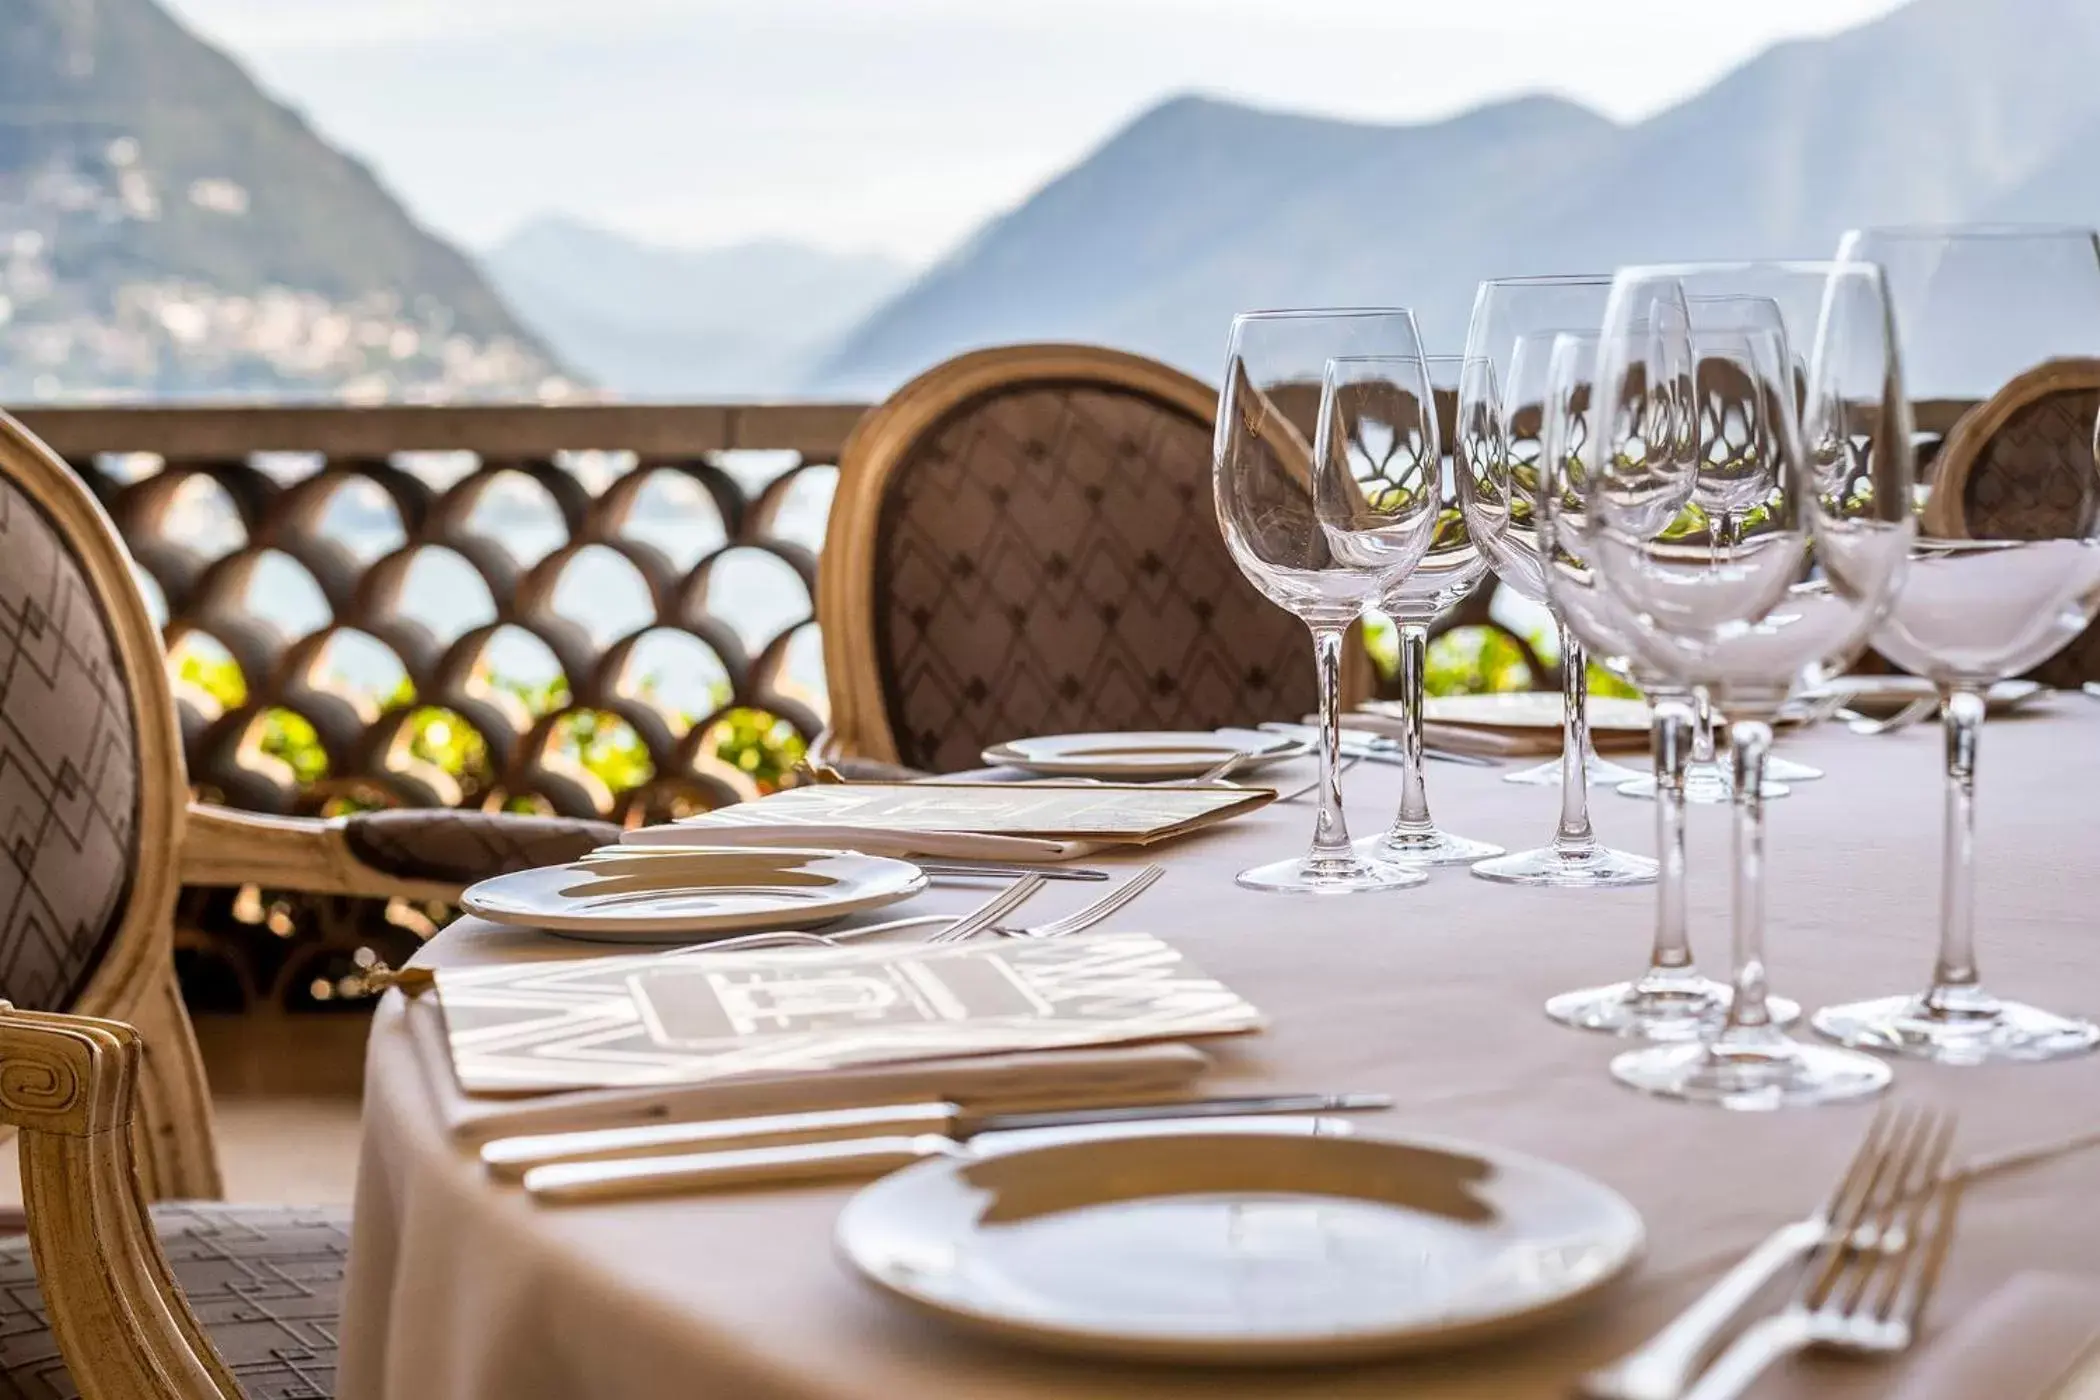 Banquet/Function facilities, Restaurant/Places to Eat in Villa Principe Leopoldo - Ticino Hotels Group